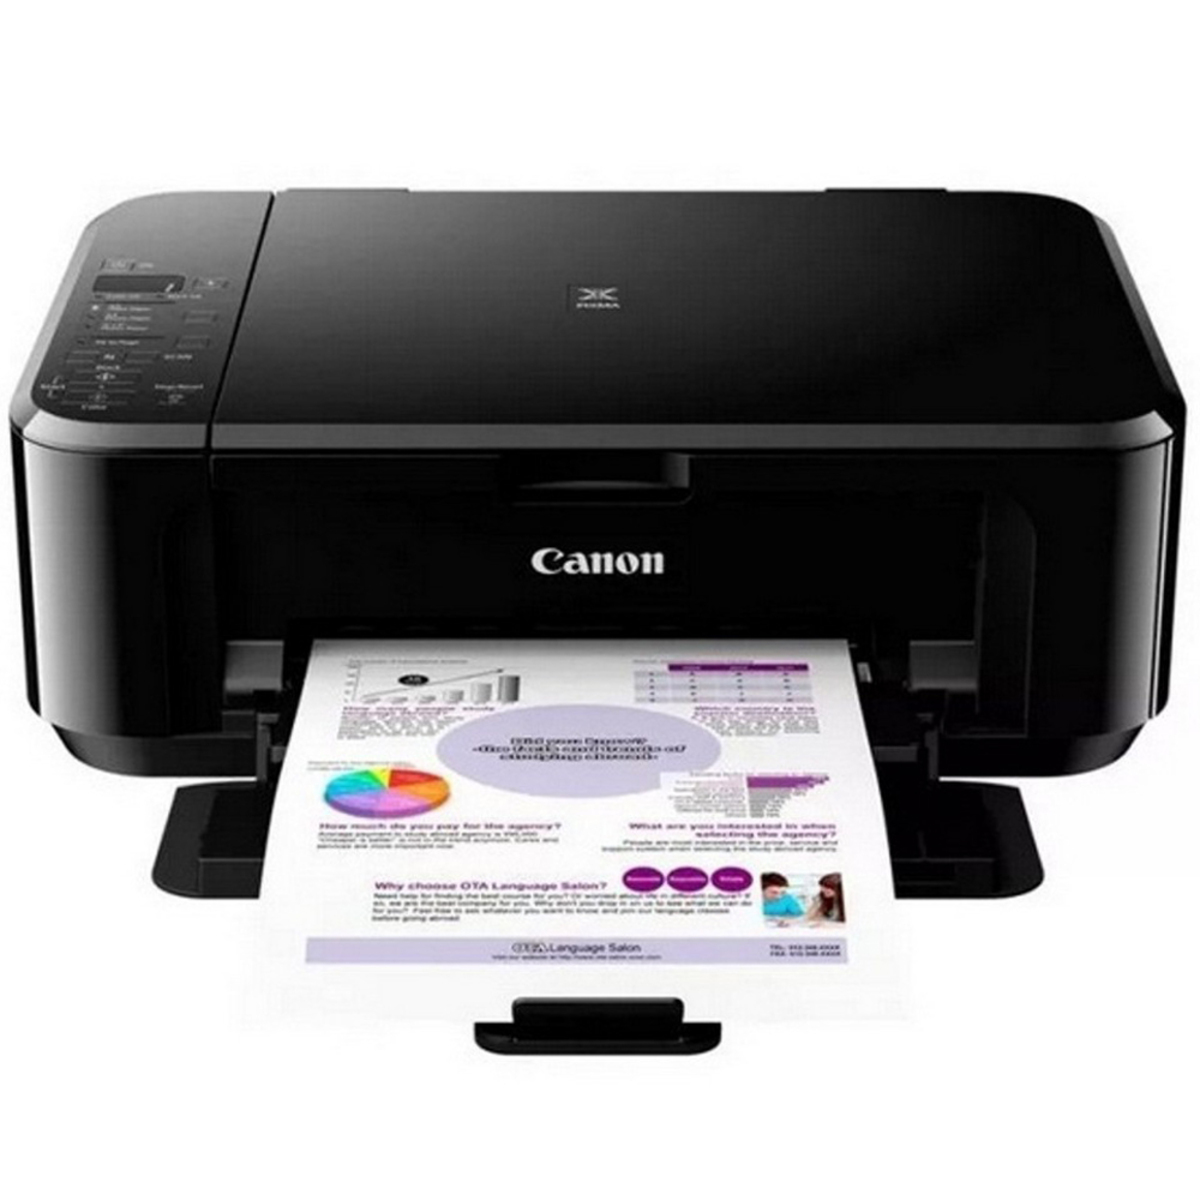 Canon Inkjet All In One Printer E510